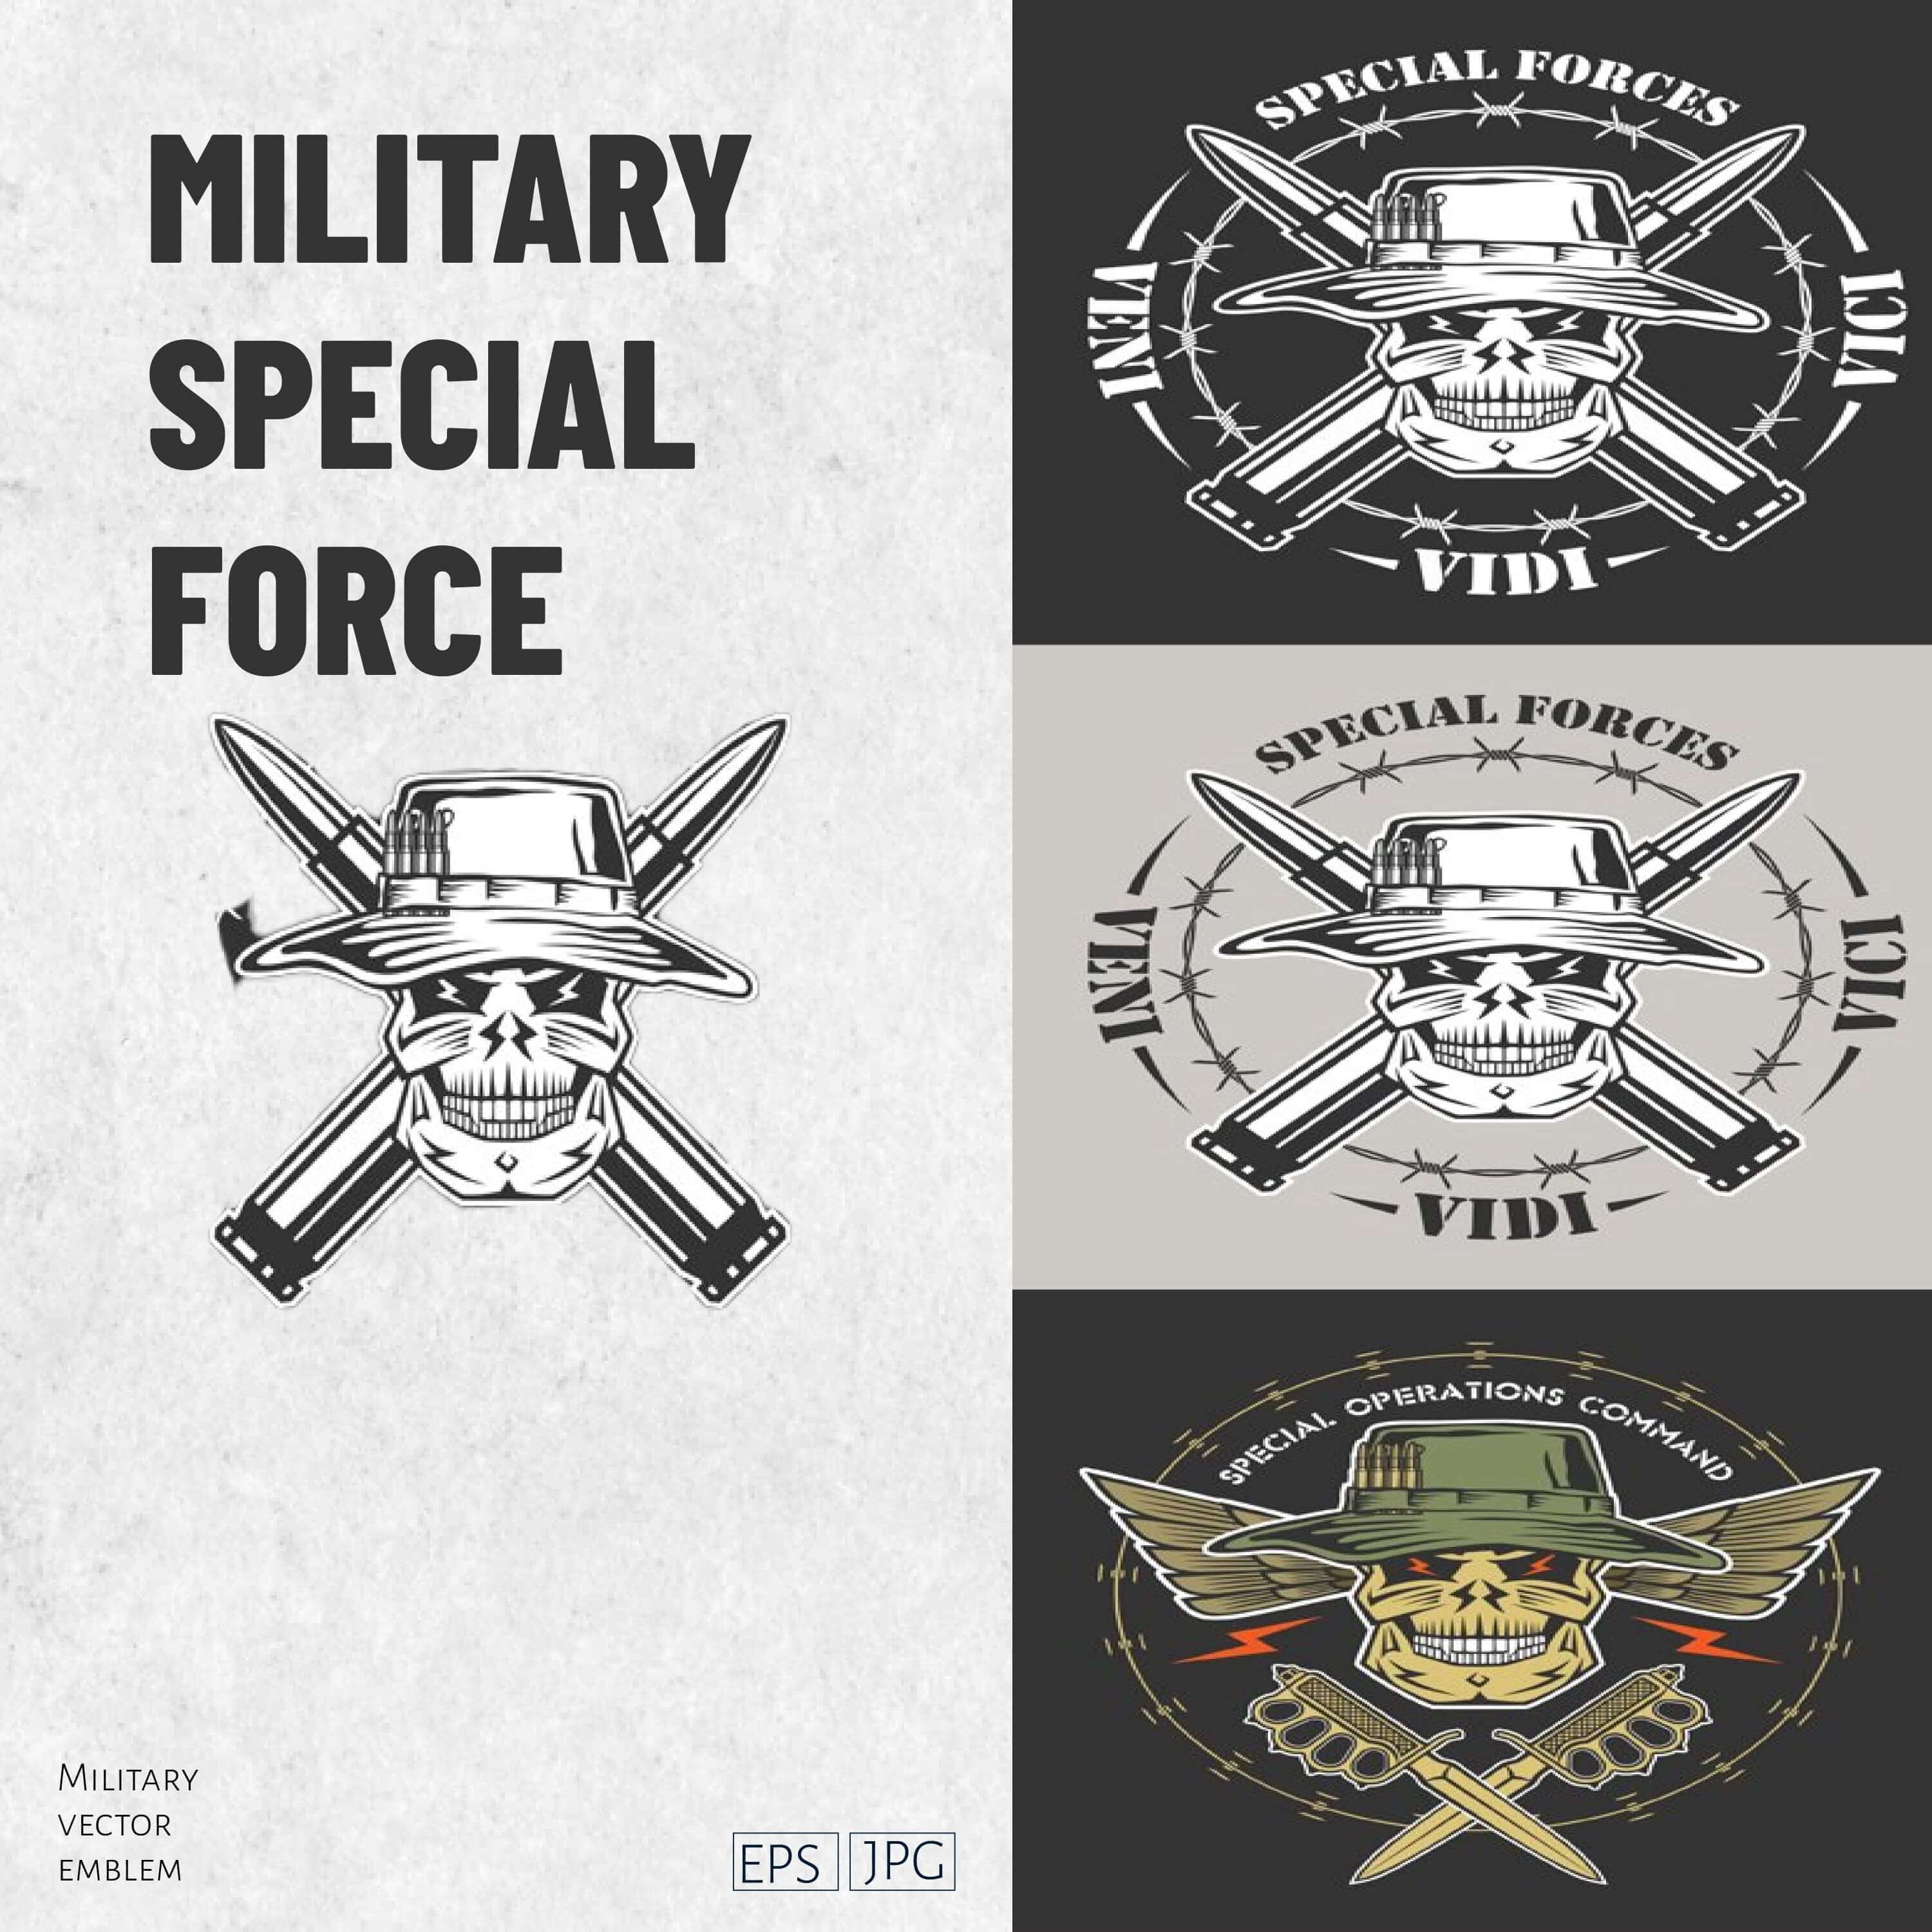 Military Emblem: Special Forces.